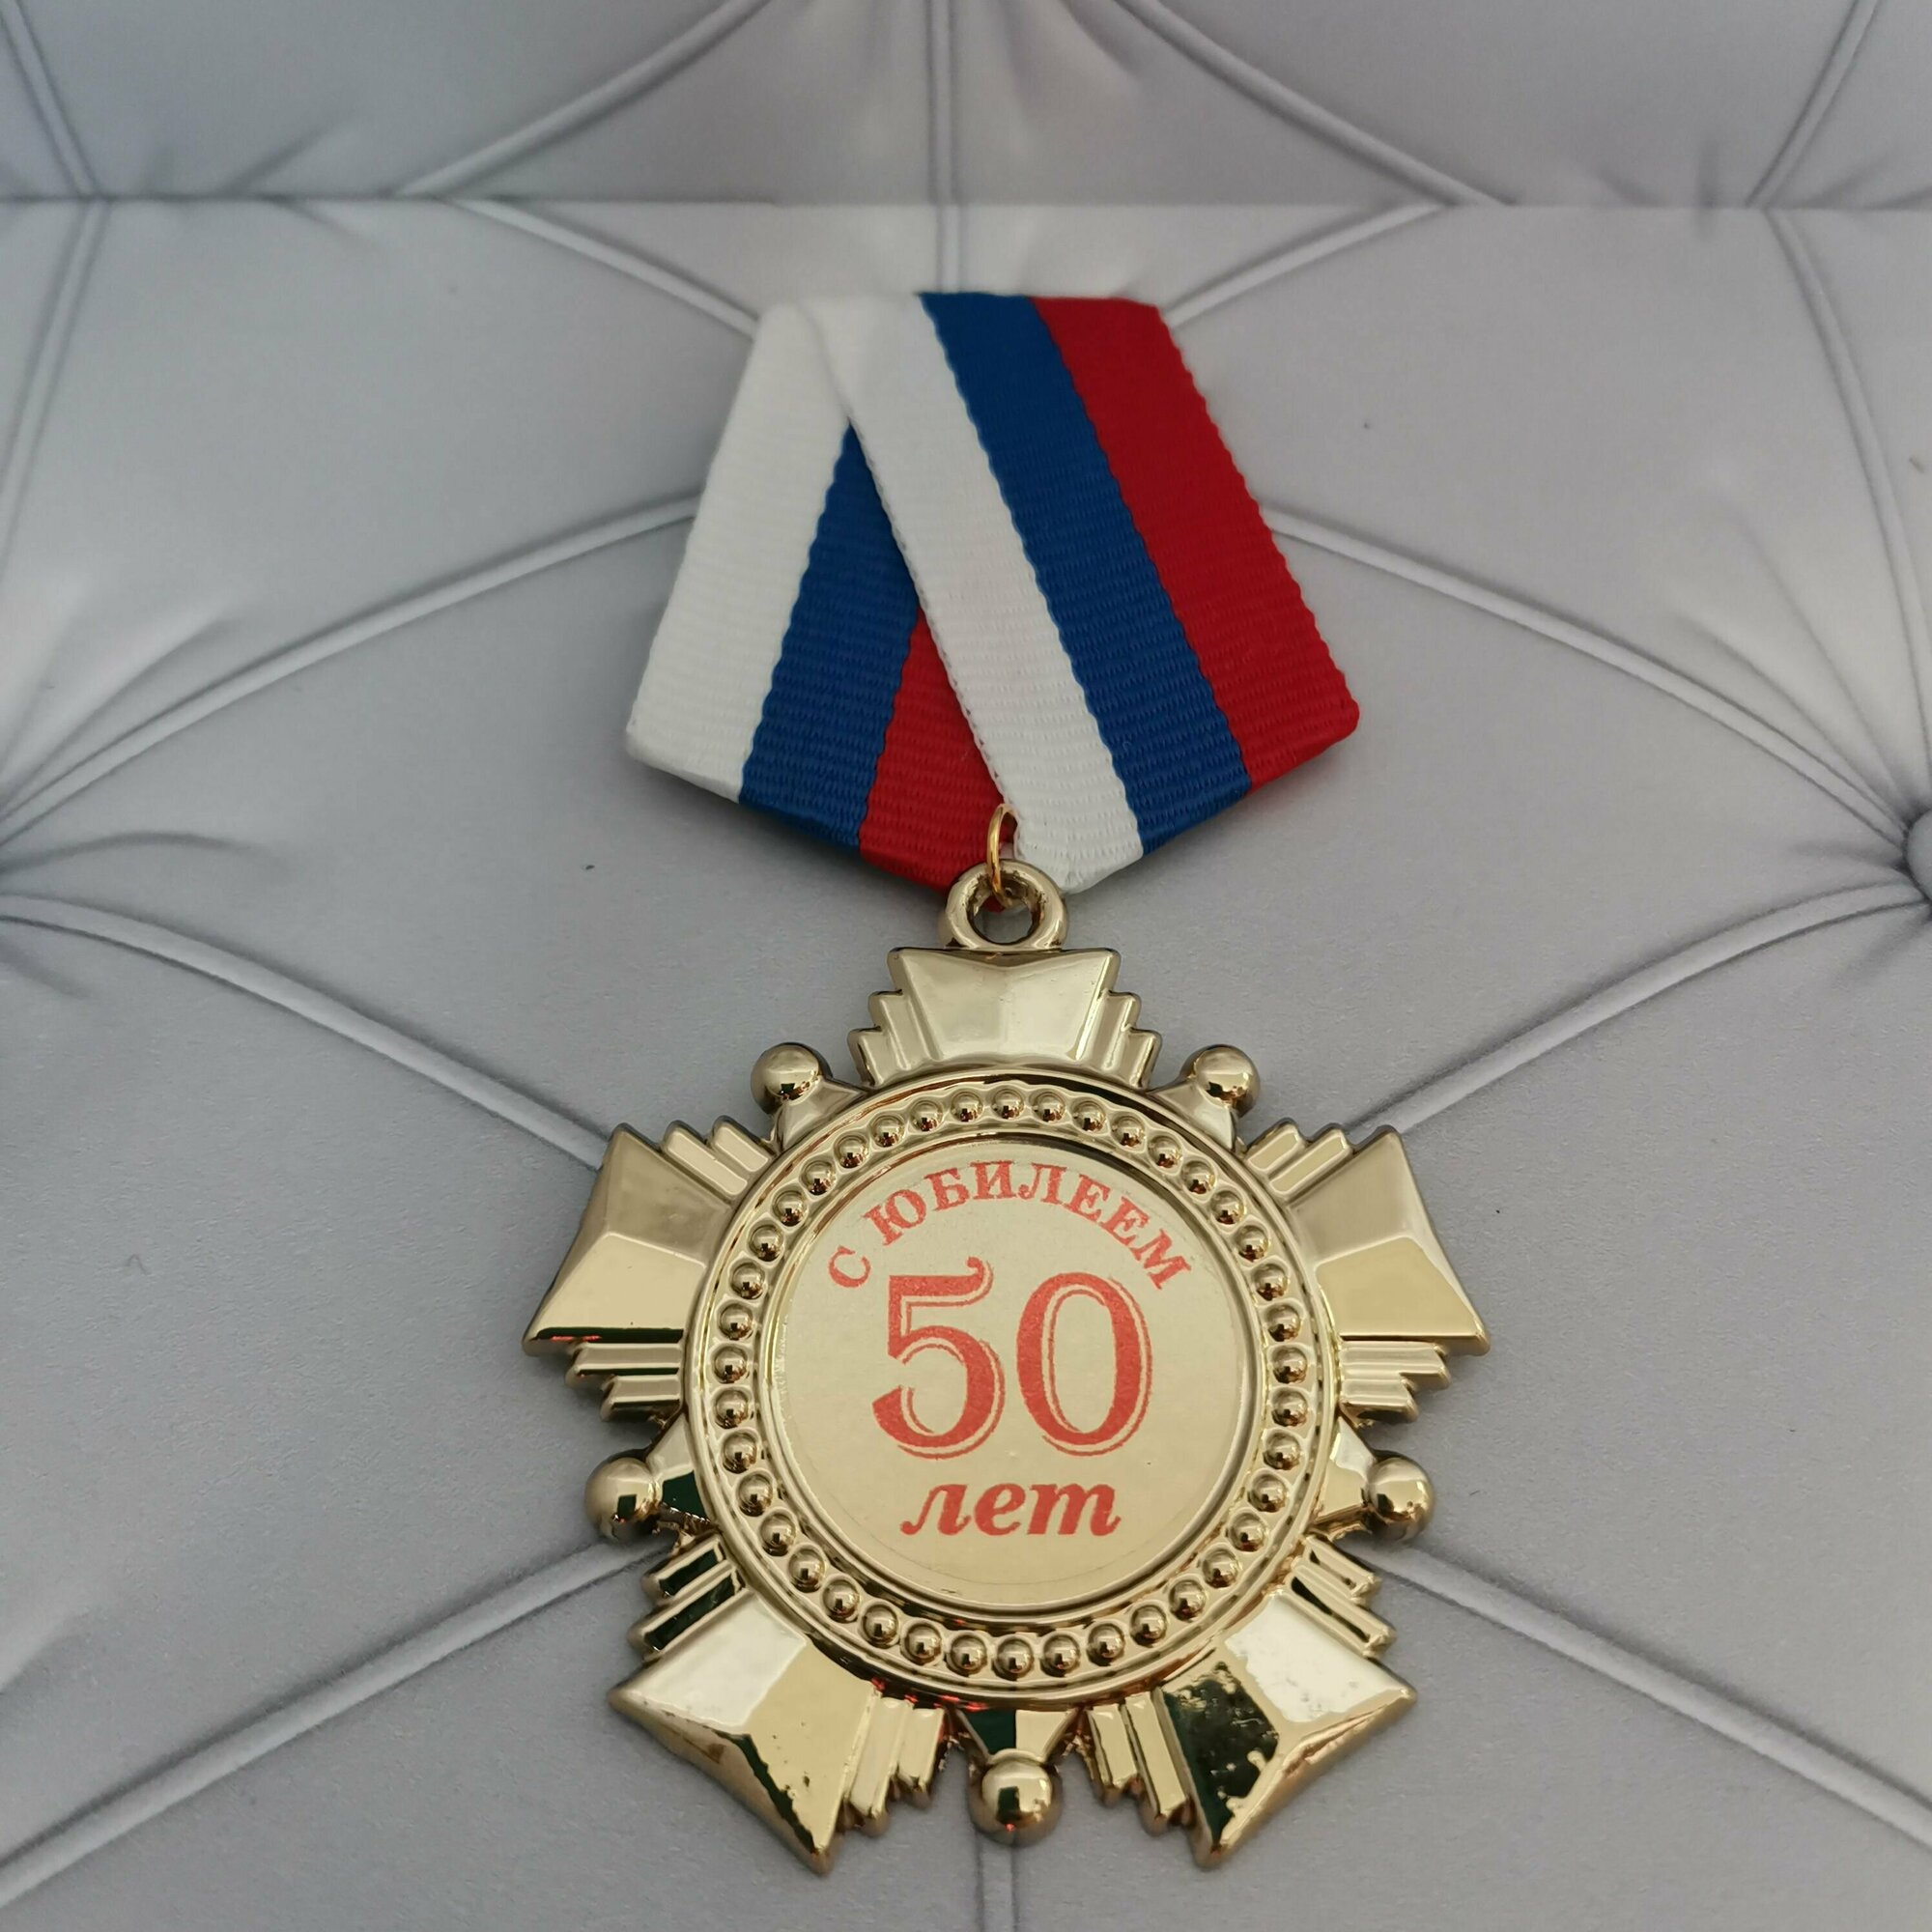 Орден 50 лет, медаль, подарок, сувенир, награда.